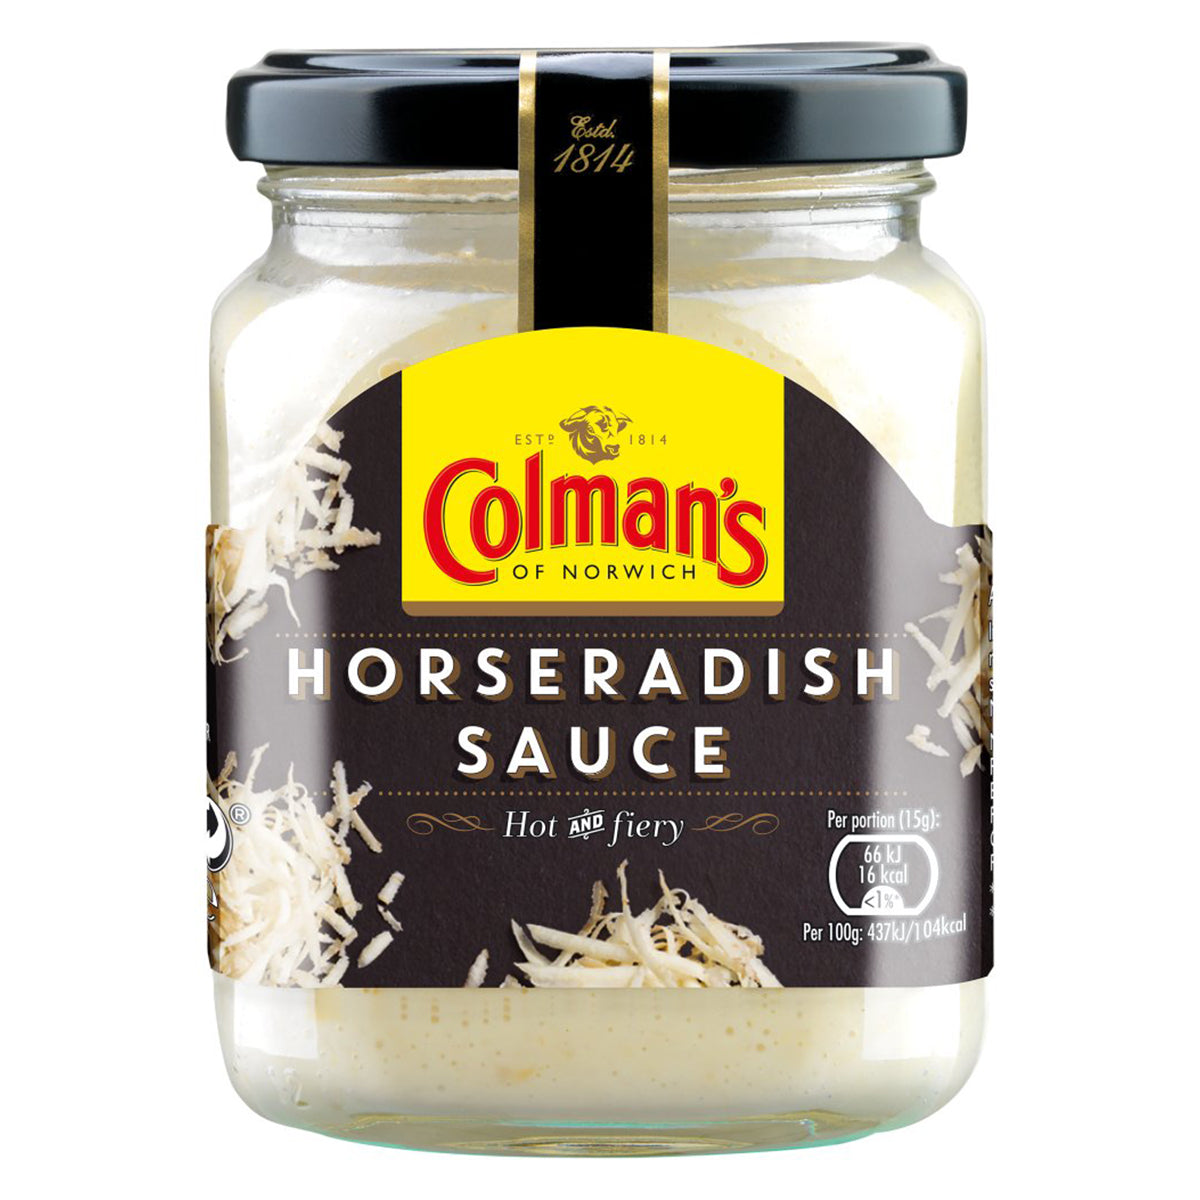 Colmans - Horseradish Sauce - 136g in a jar.